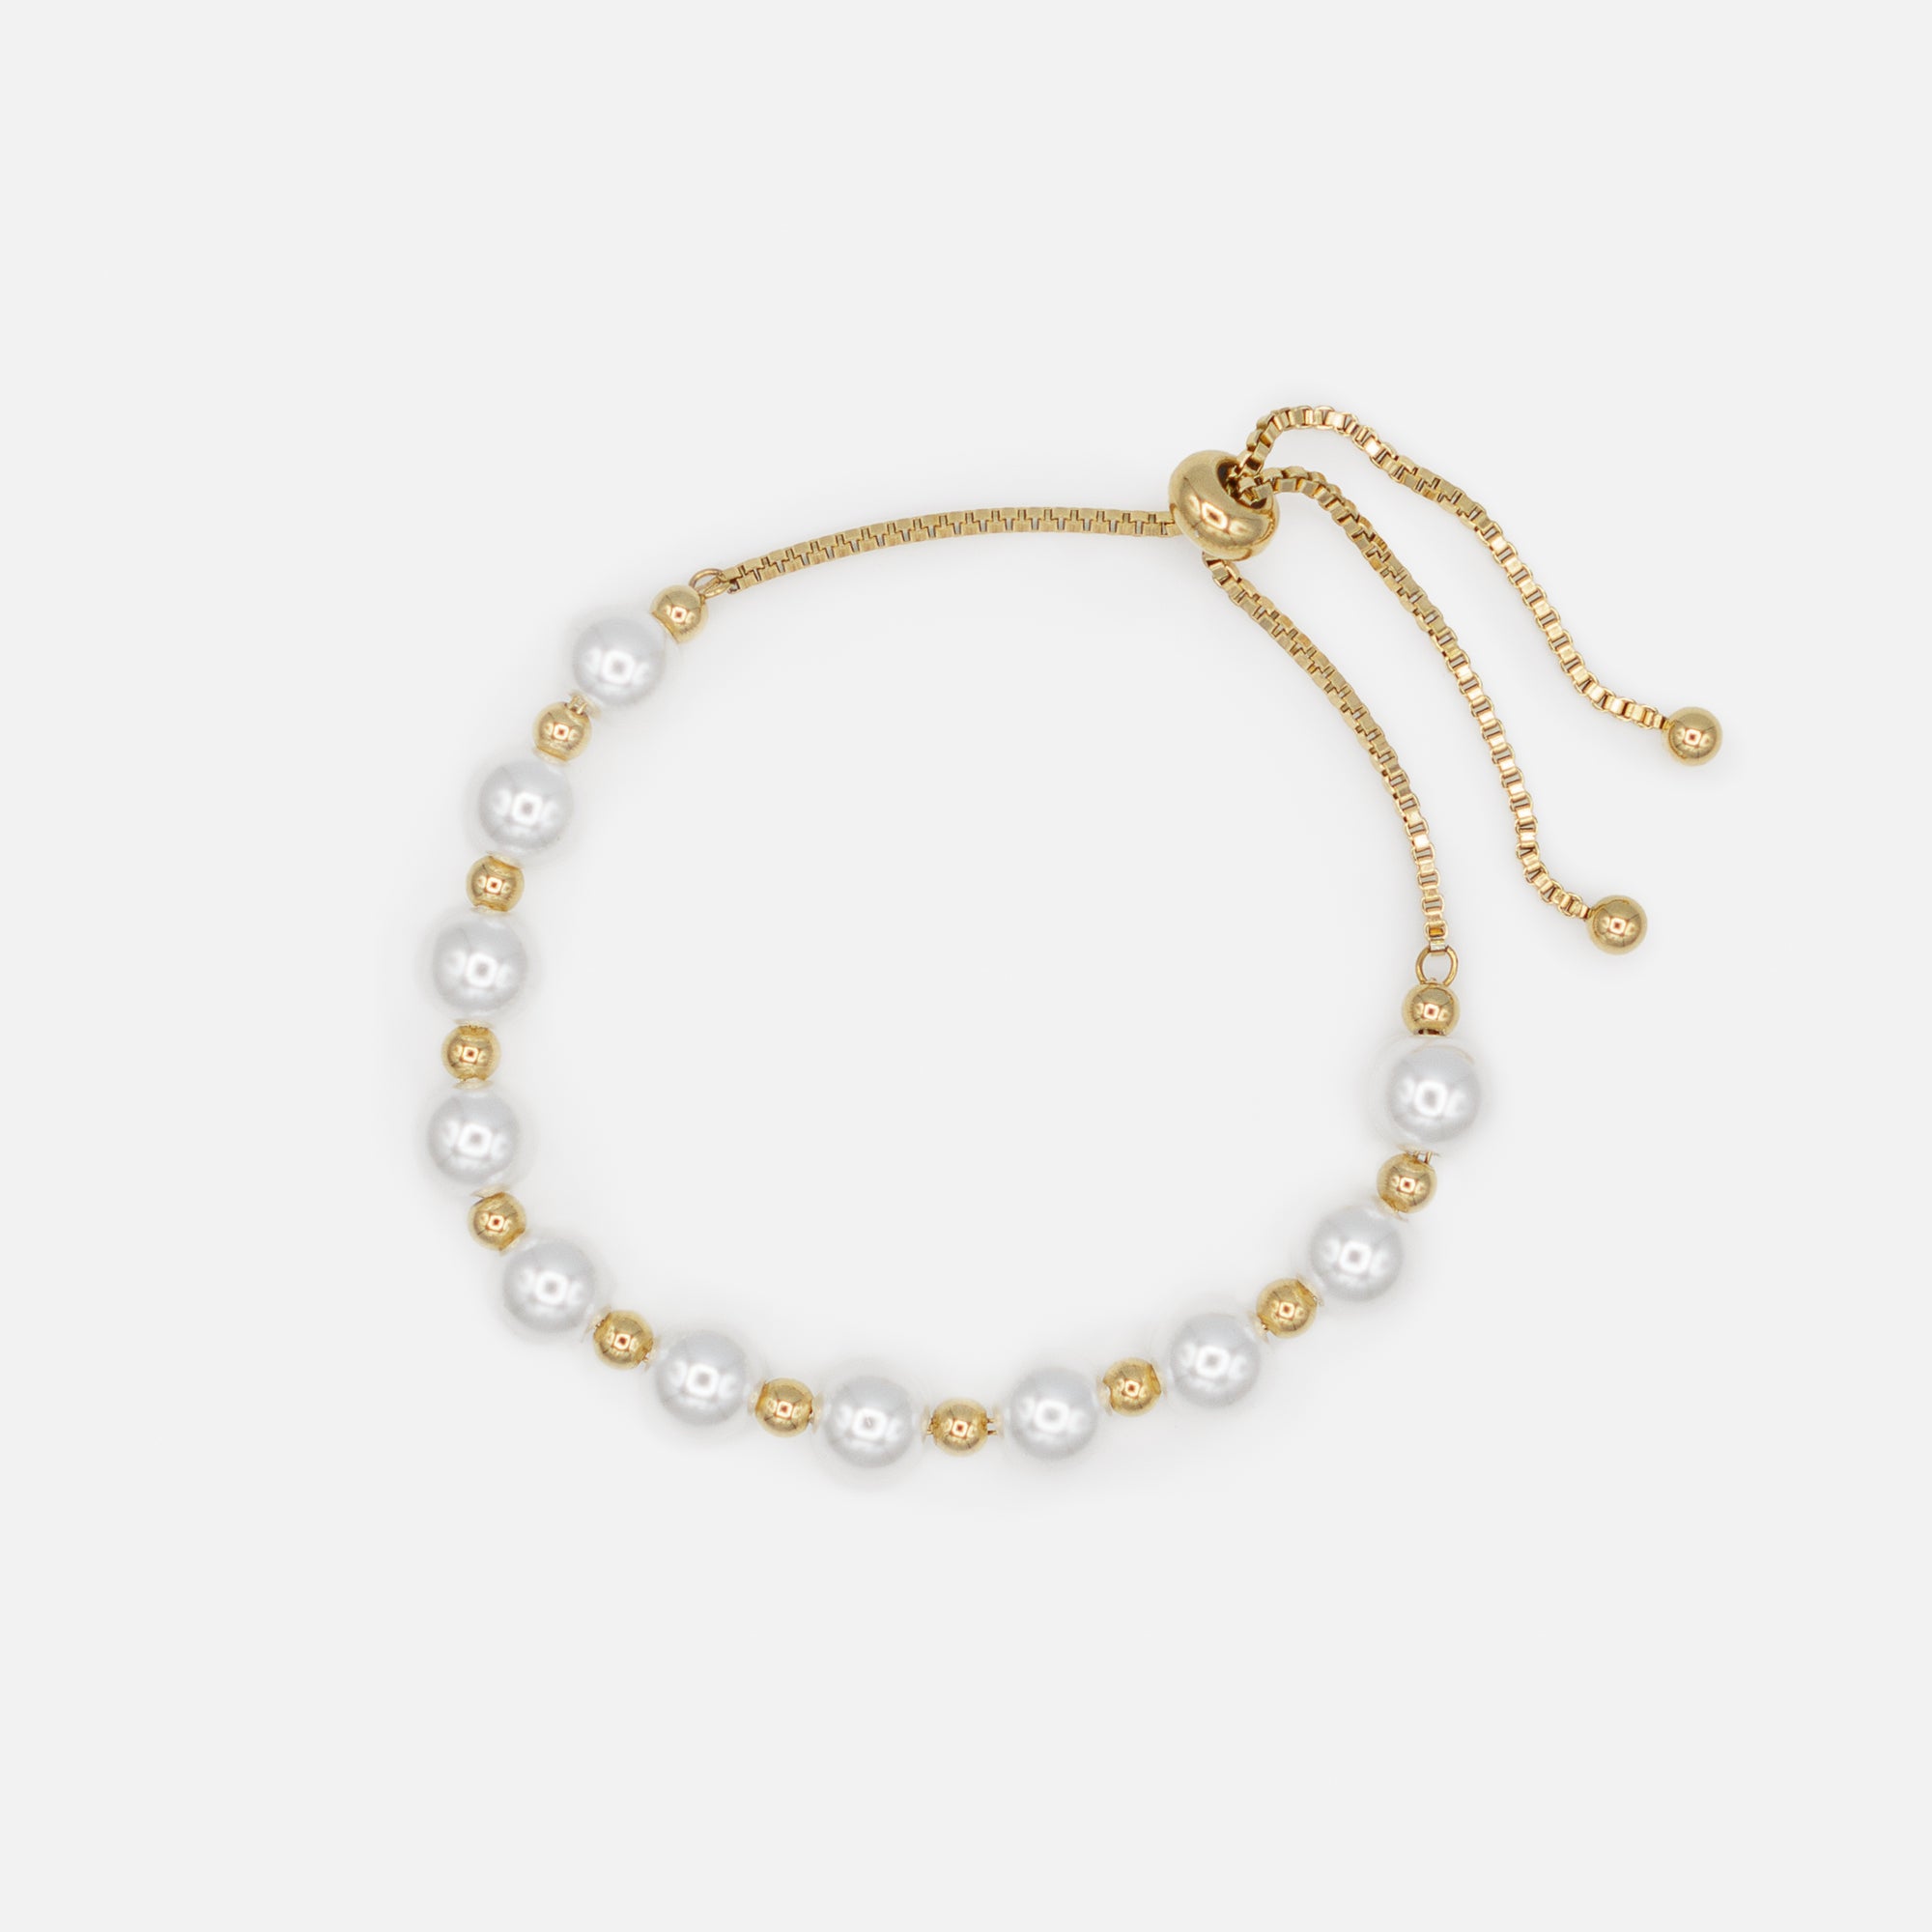 Bracelet perles et billes dorées en acier inoxydable